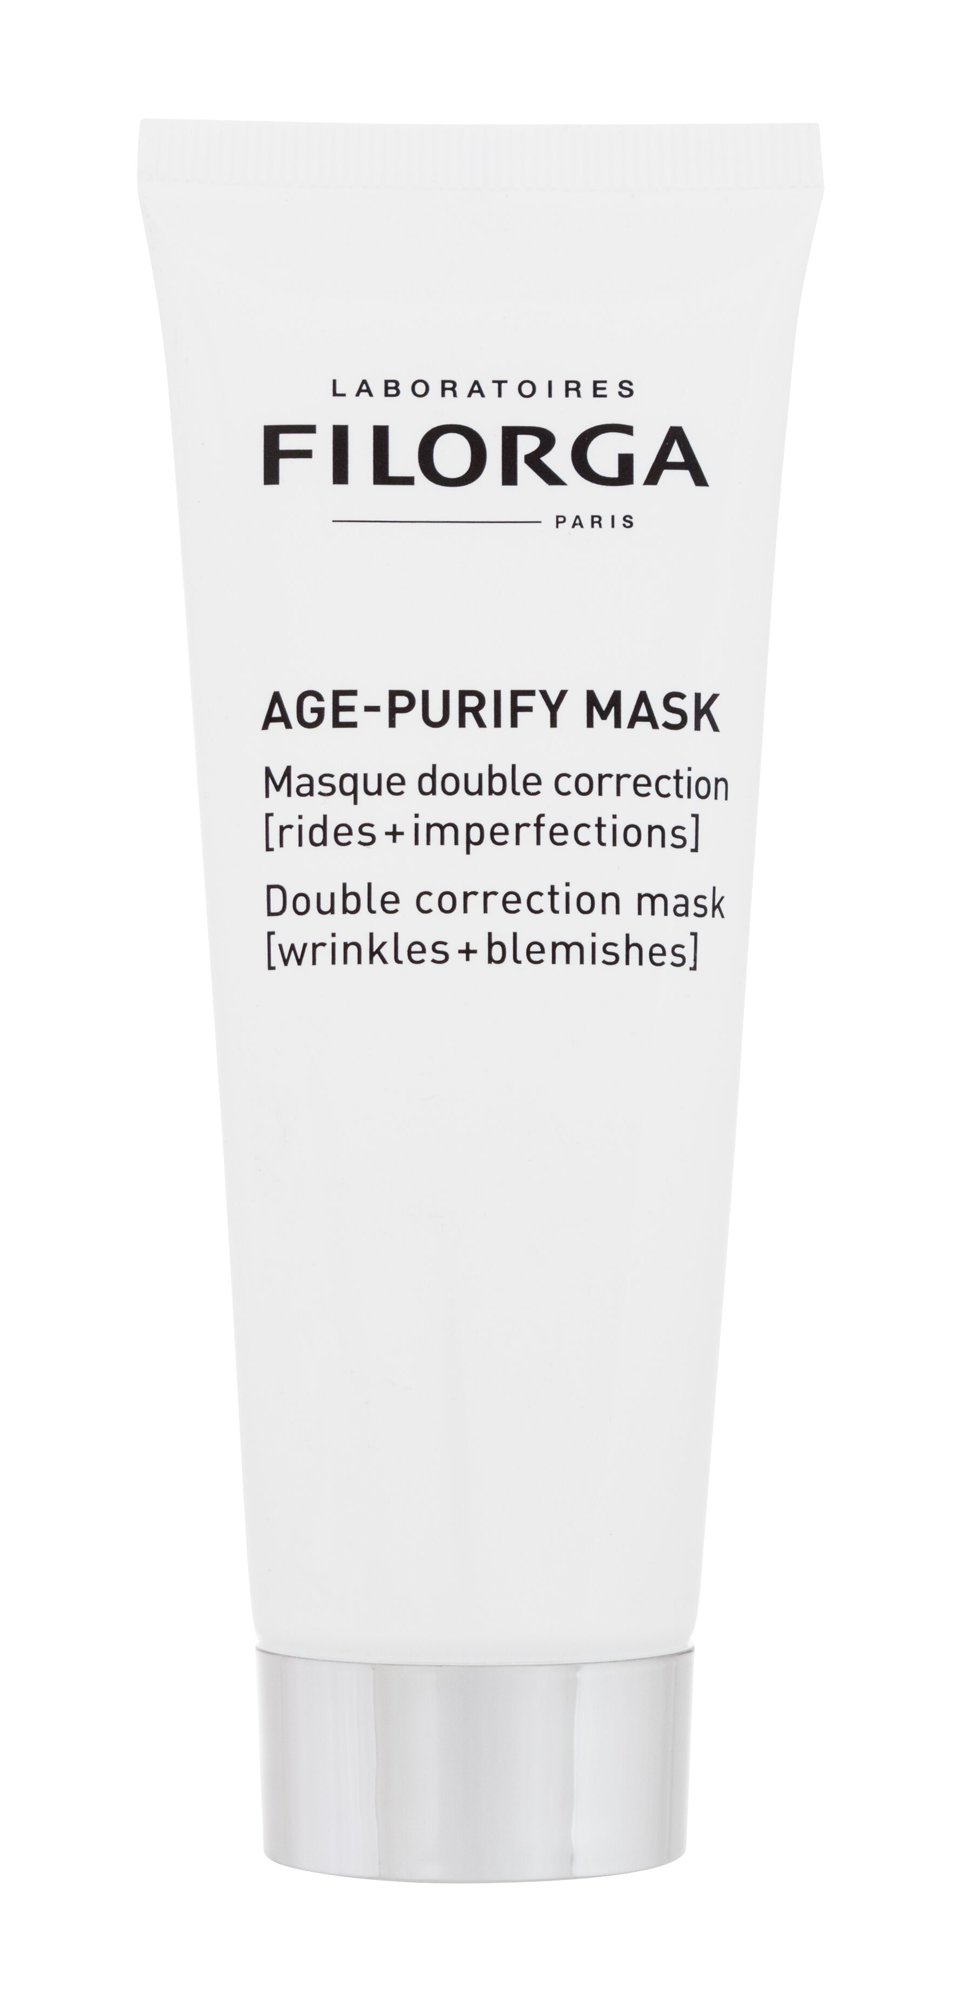 Filorga Age-Purify Mask Double Correction Mask Veido kaukė